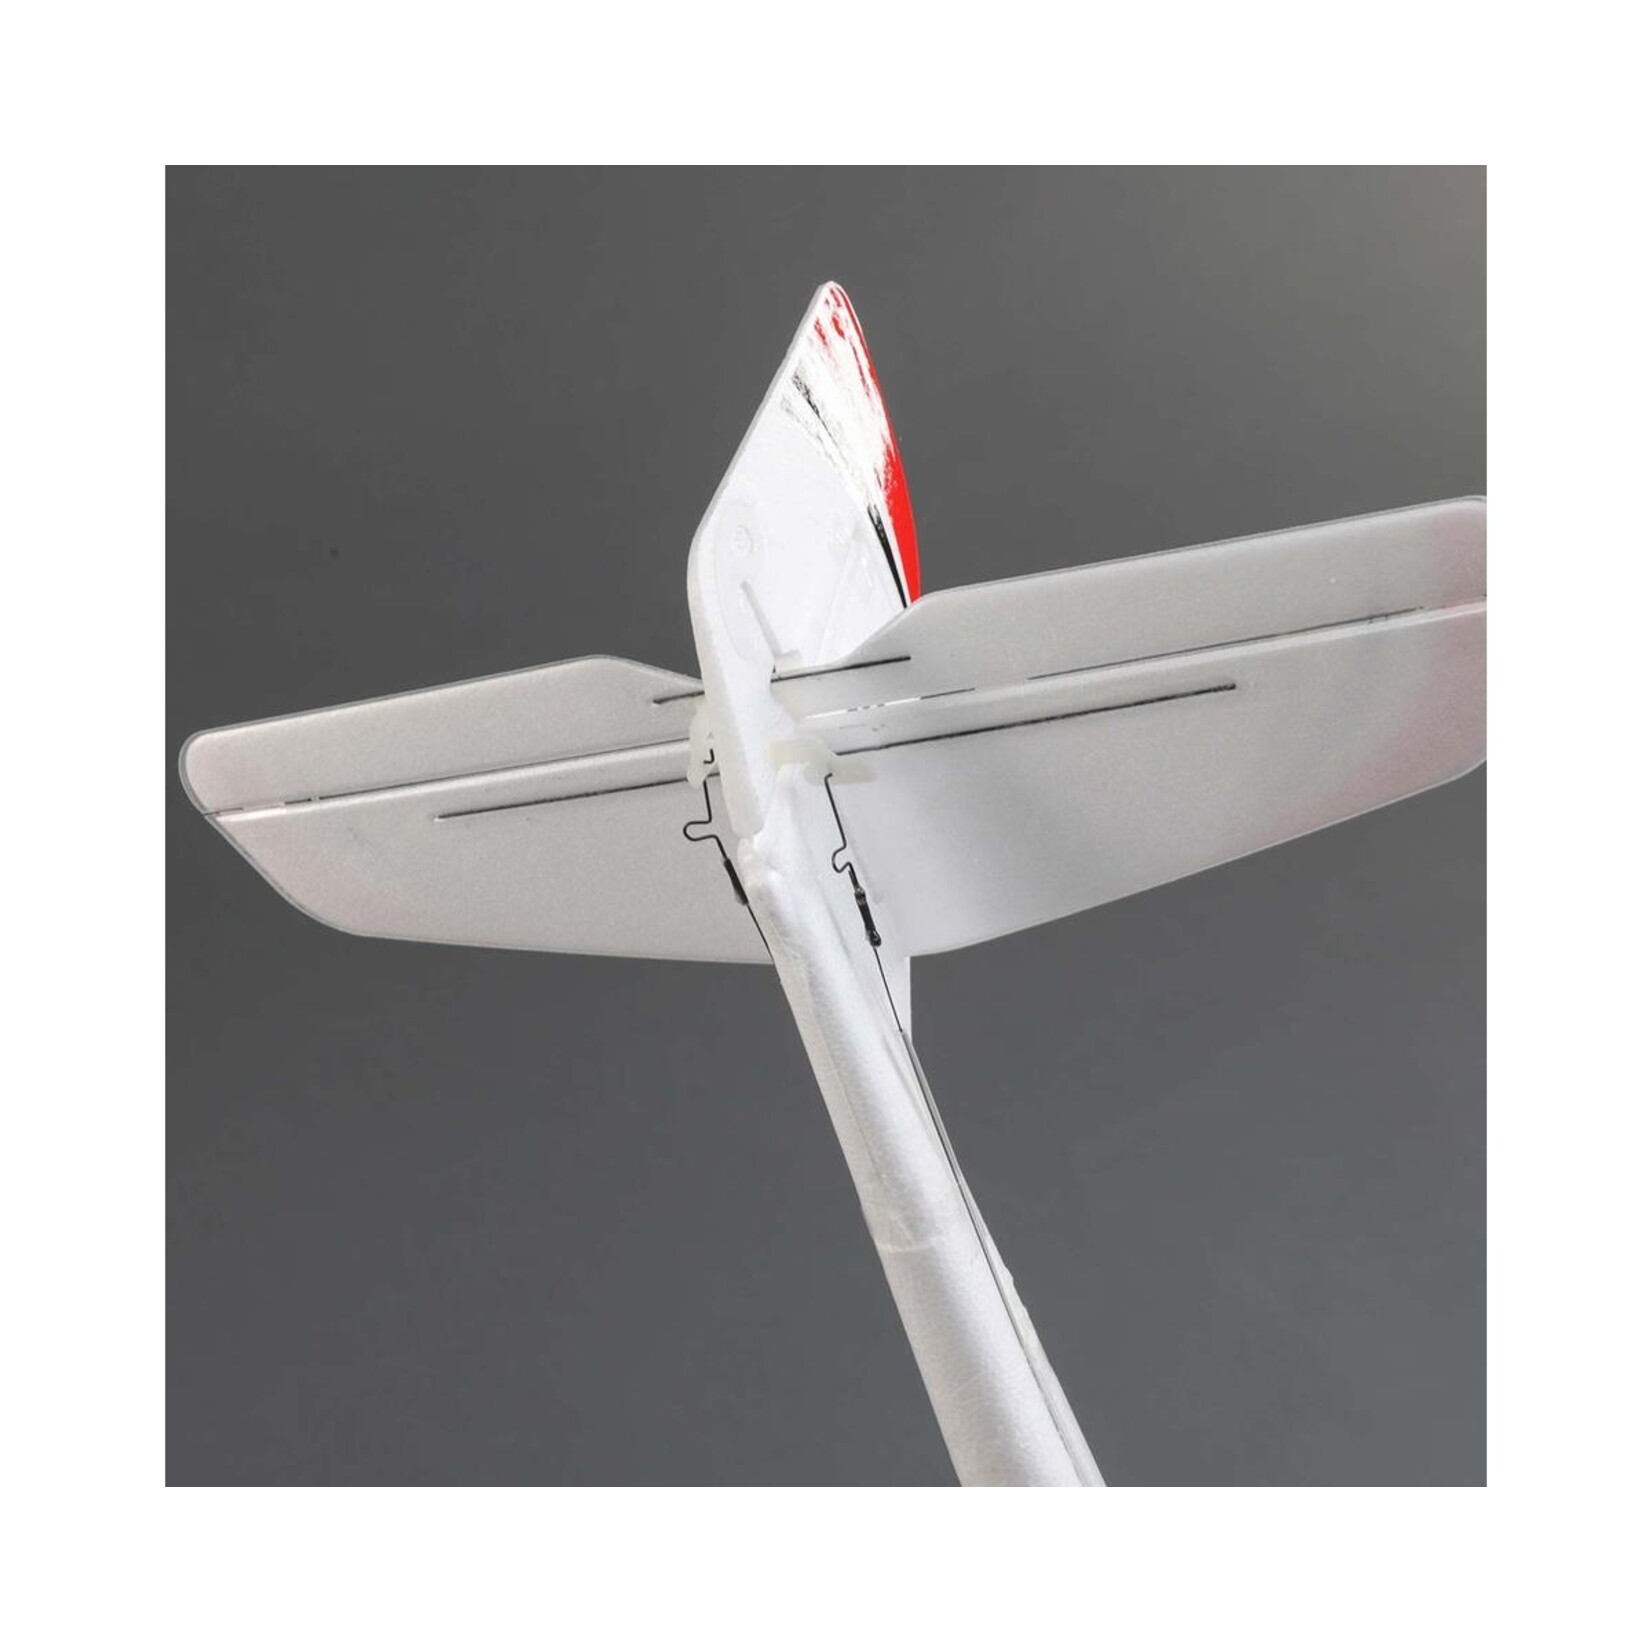 E-flite E-flite UMX Radian Bind-N-Fly Basic Electric Airplane (730mm) w/AS3X & SAFE #EFLU2950